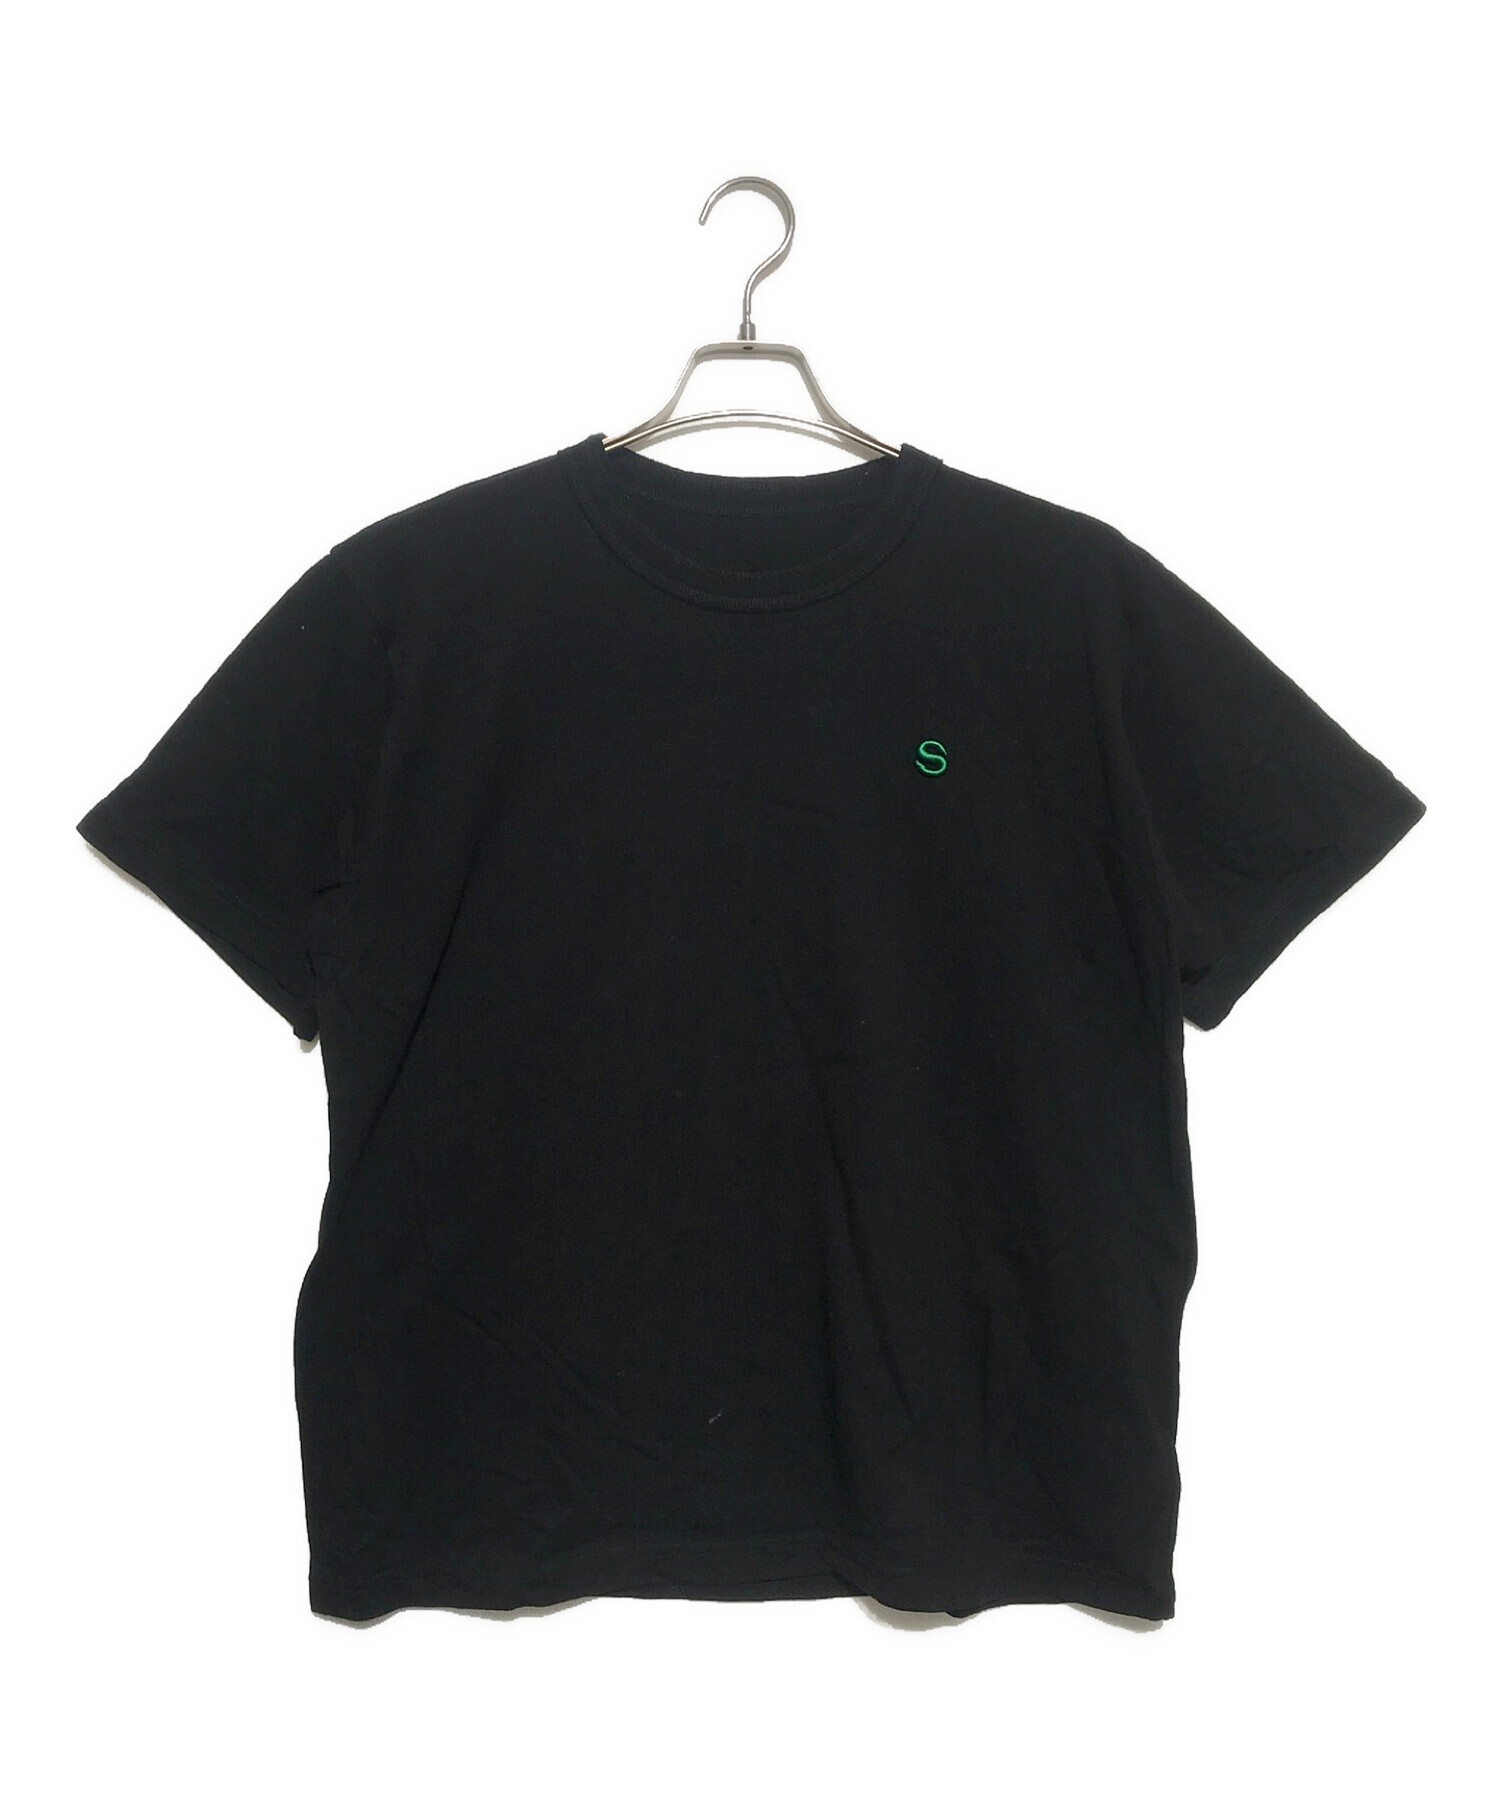 sacai (サカイ) Hello sacai Exclusive T-Shirt ブラック サイズ:3